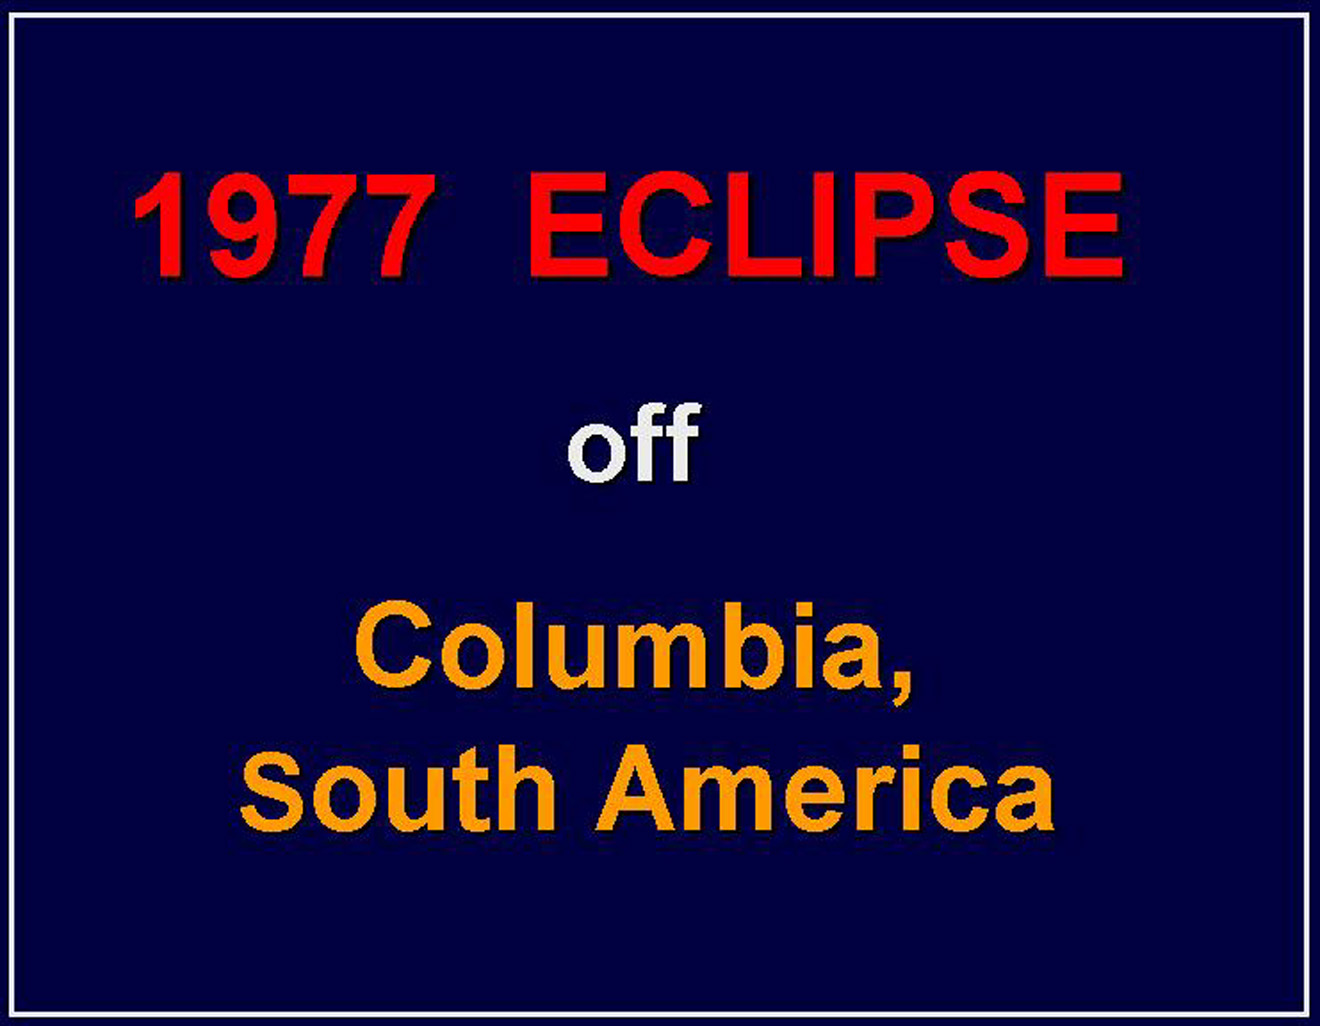 Eclipse 1977 - A00 - Slide11 - Title